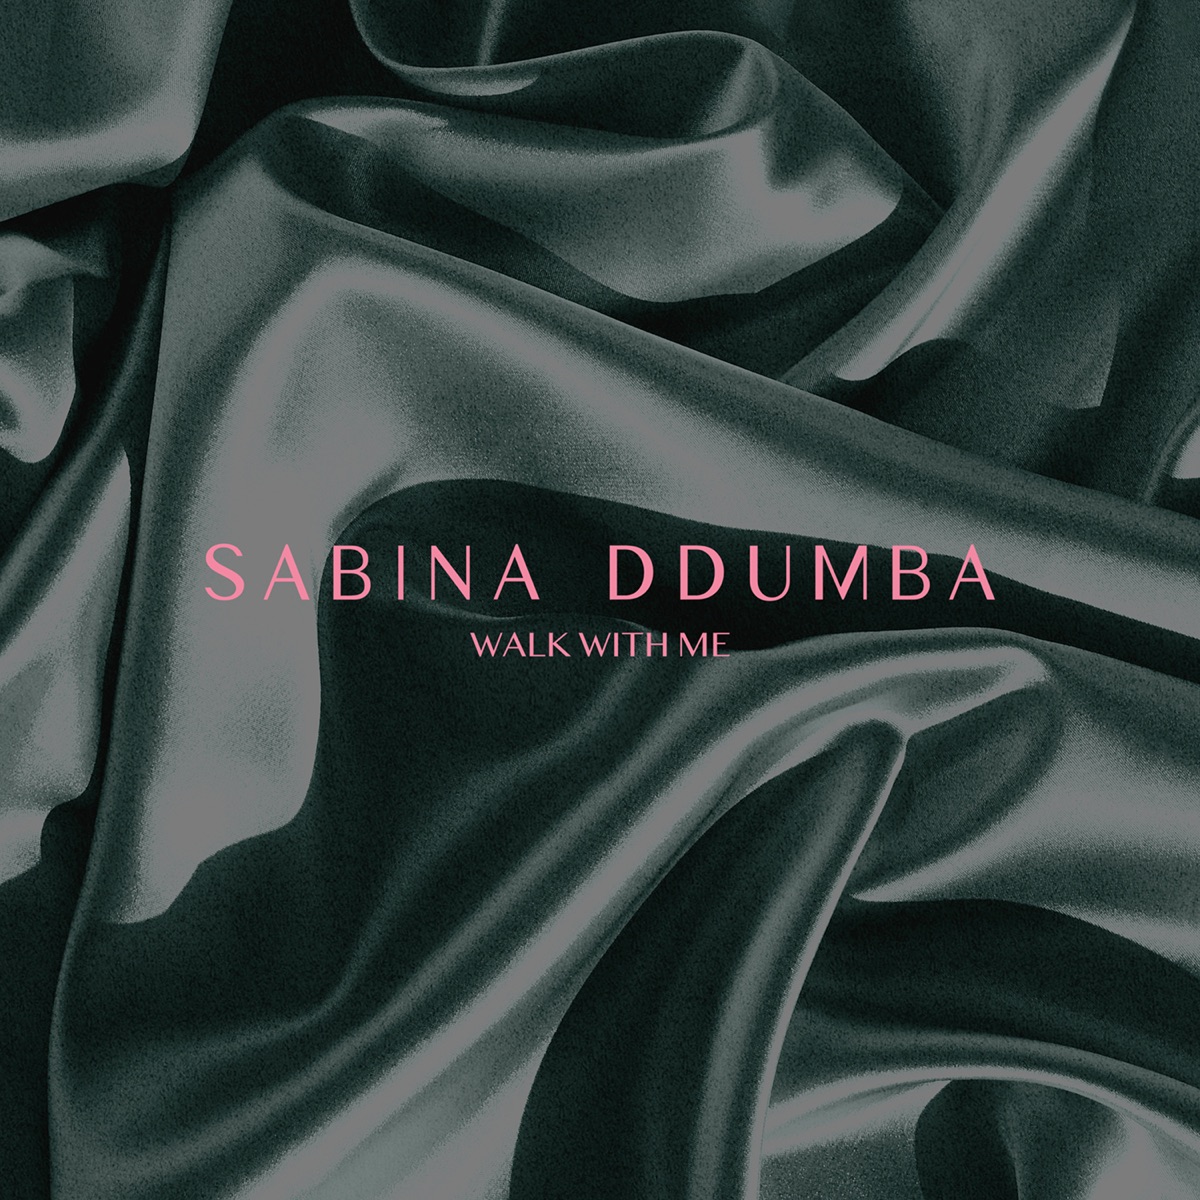 Conversation (feat. Kojo Funds) - Single by Sabina Ddumba on Apple Music